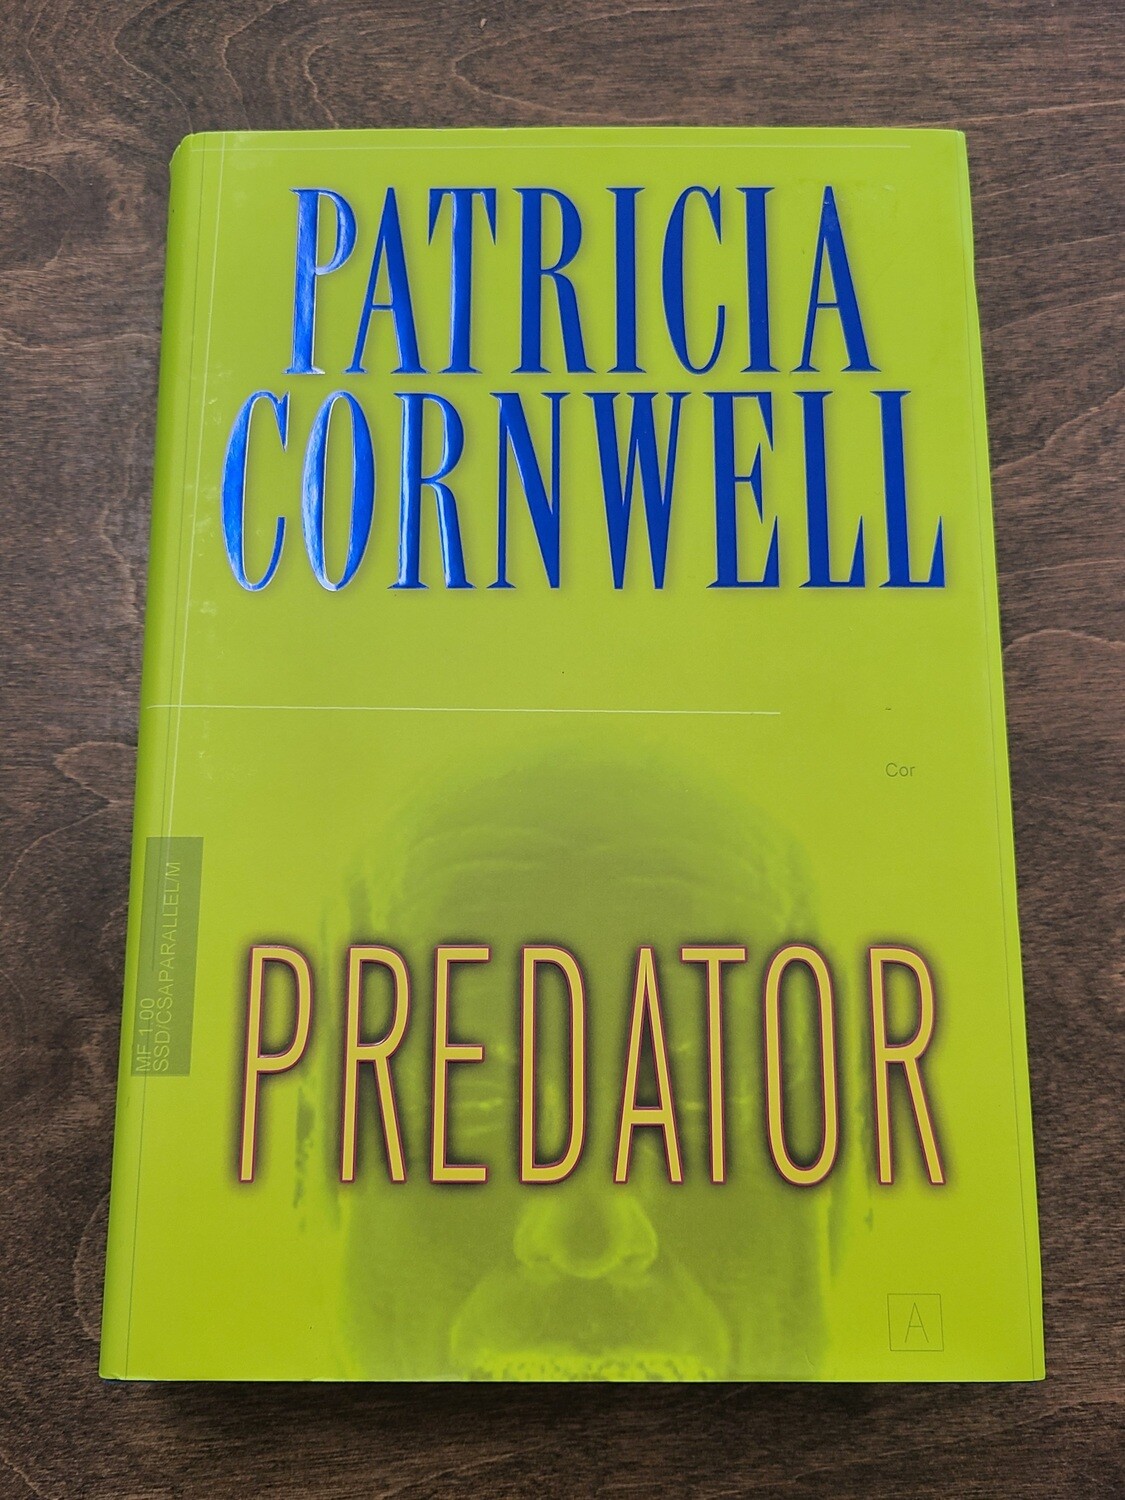 Predator by Patricia Cornwell